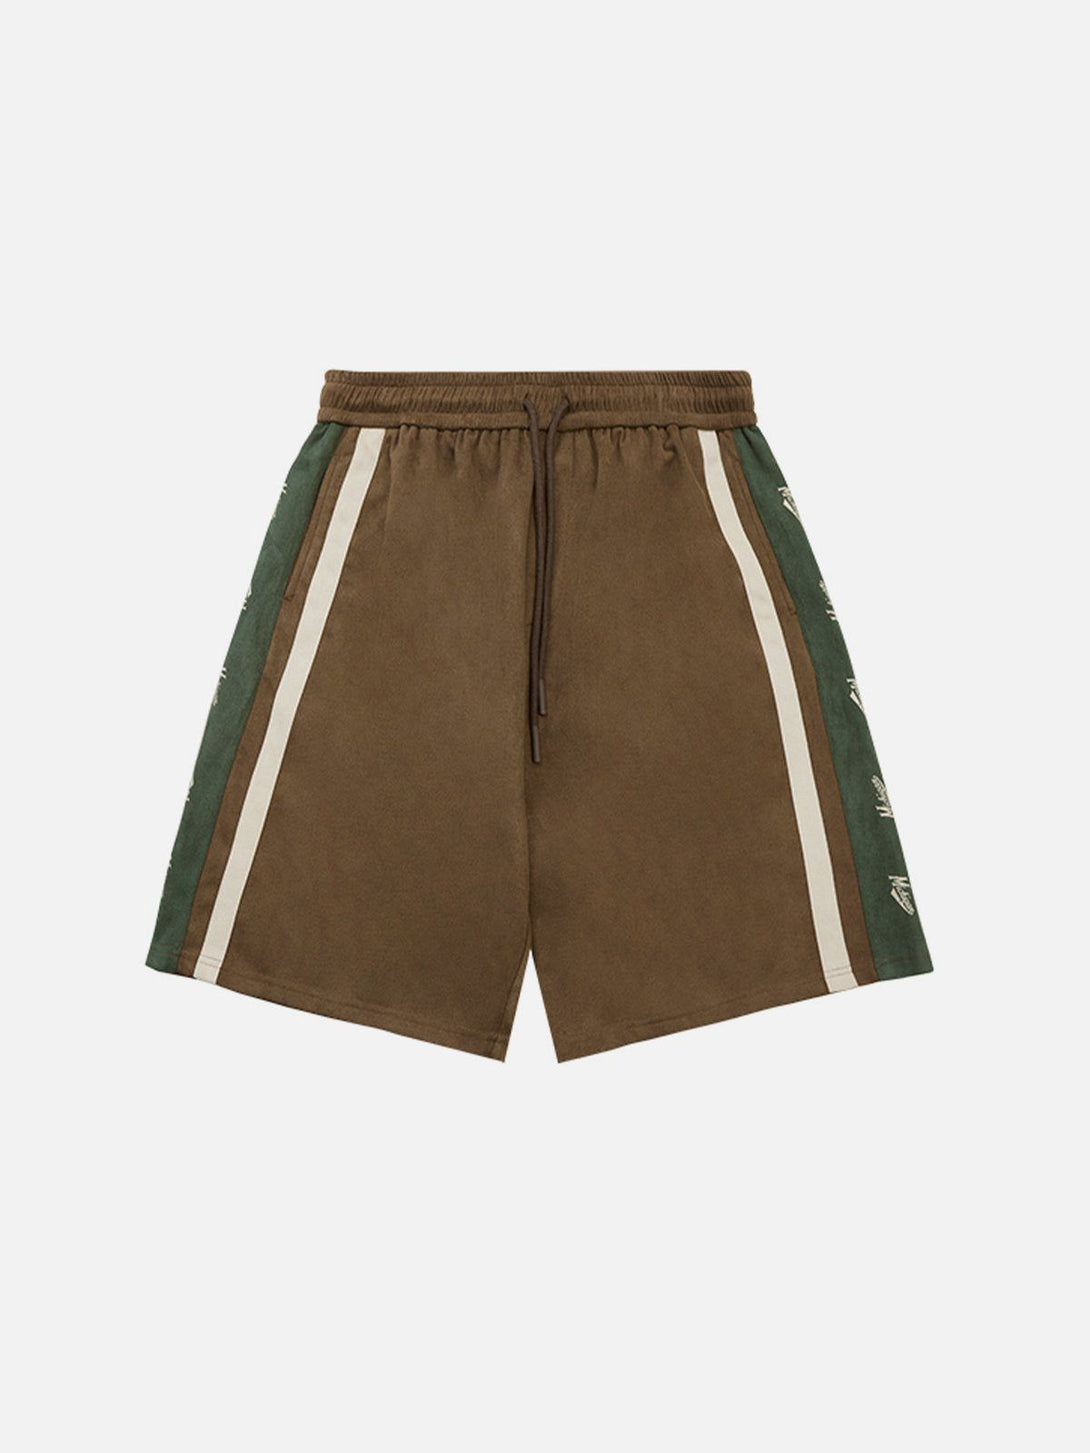 Levefly - Suede Side Stripes Shorts - Streetwear Fashion - levefly.com